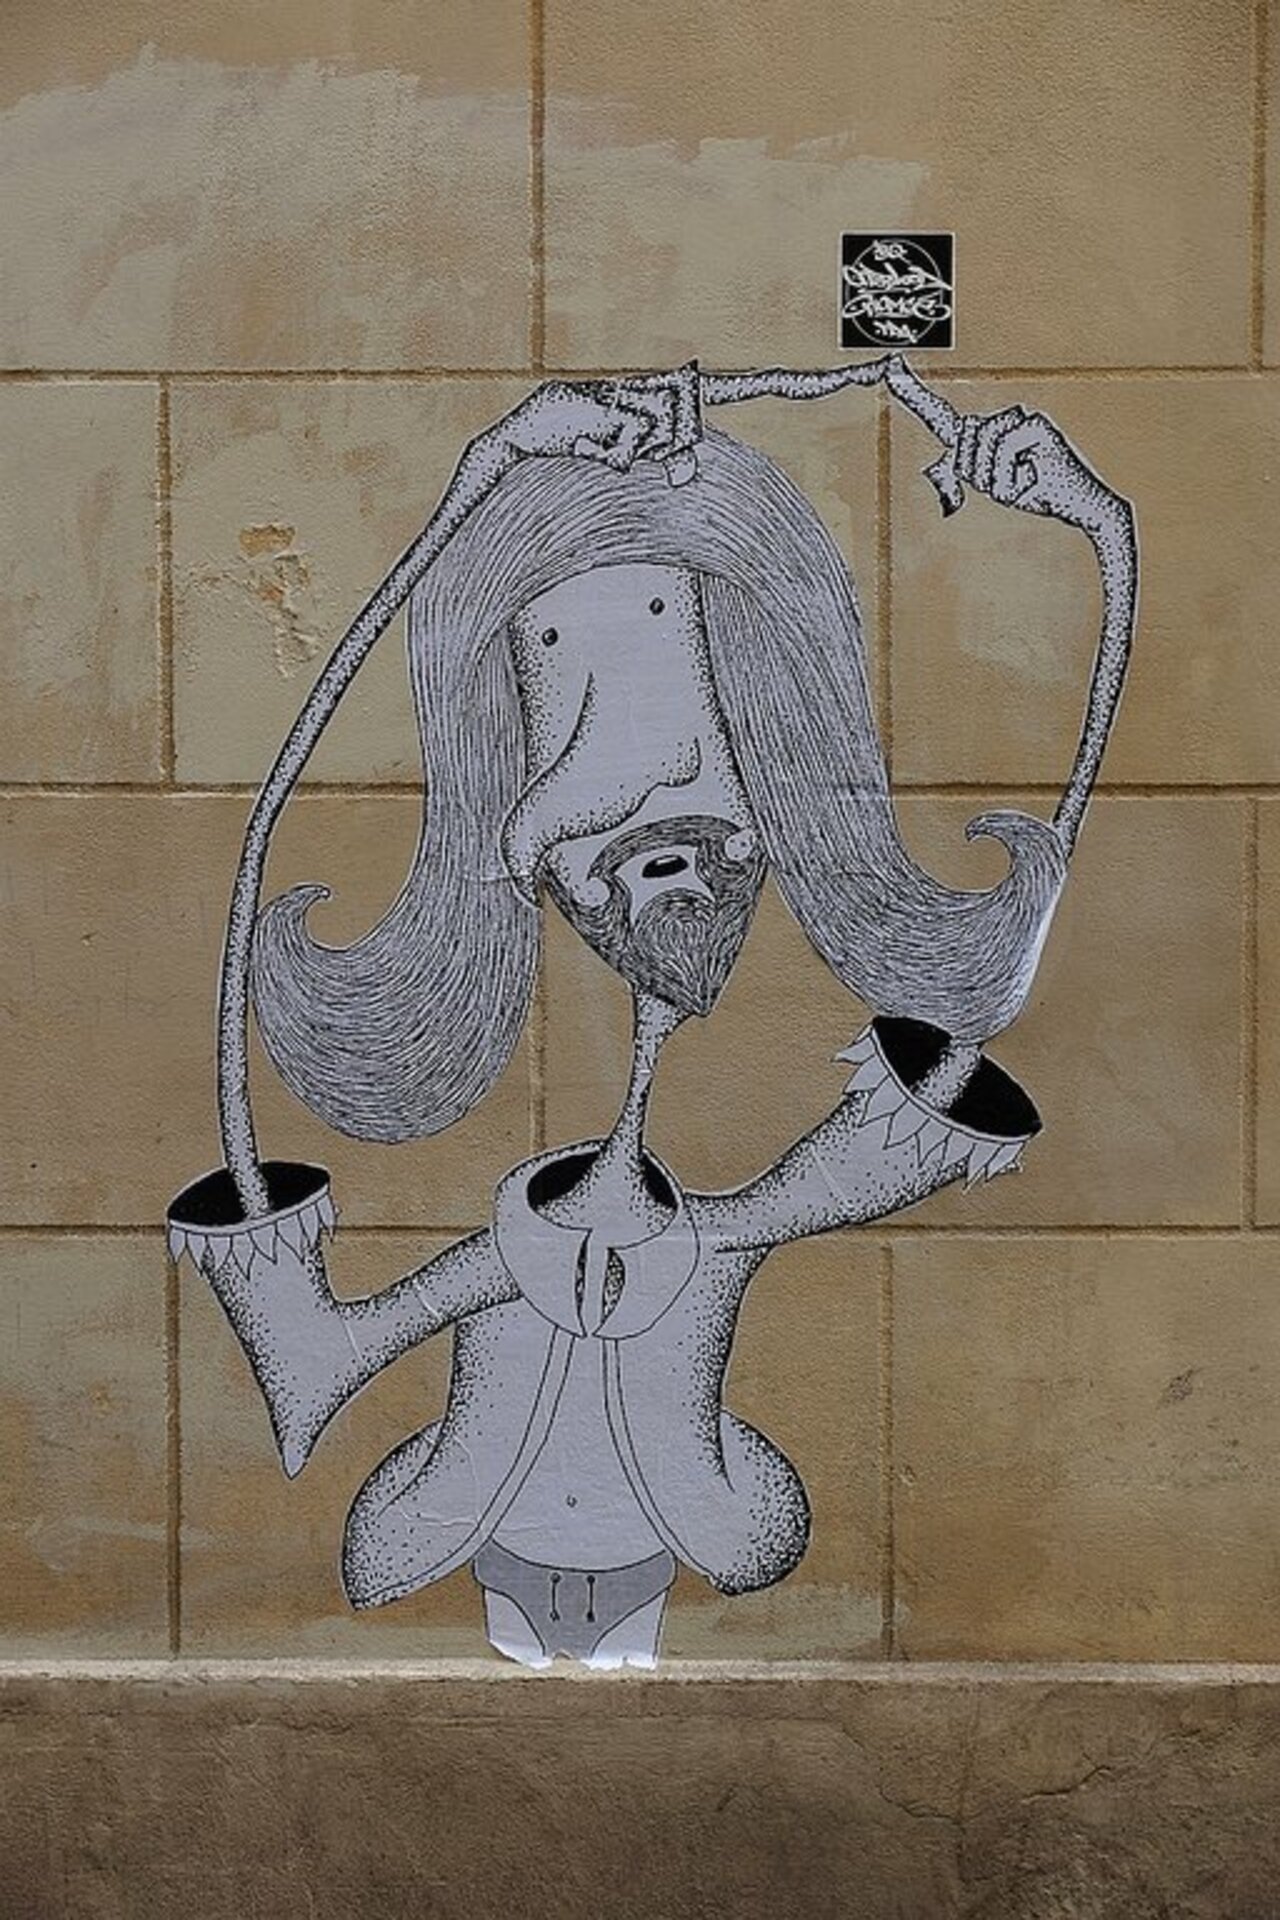 Street Art by anonymous in #Paris http://www.urbacolors.com #art #mural #graffiti #streetart https://t.co/x2YbnrmcHo